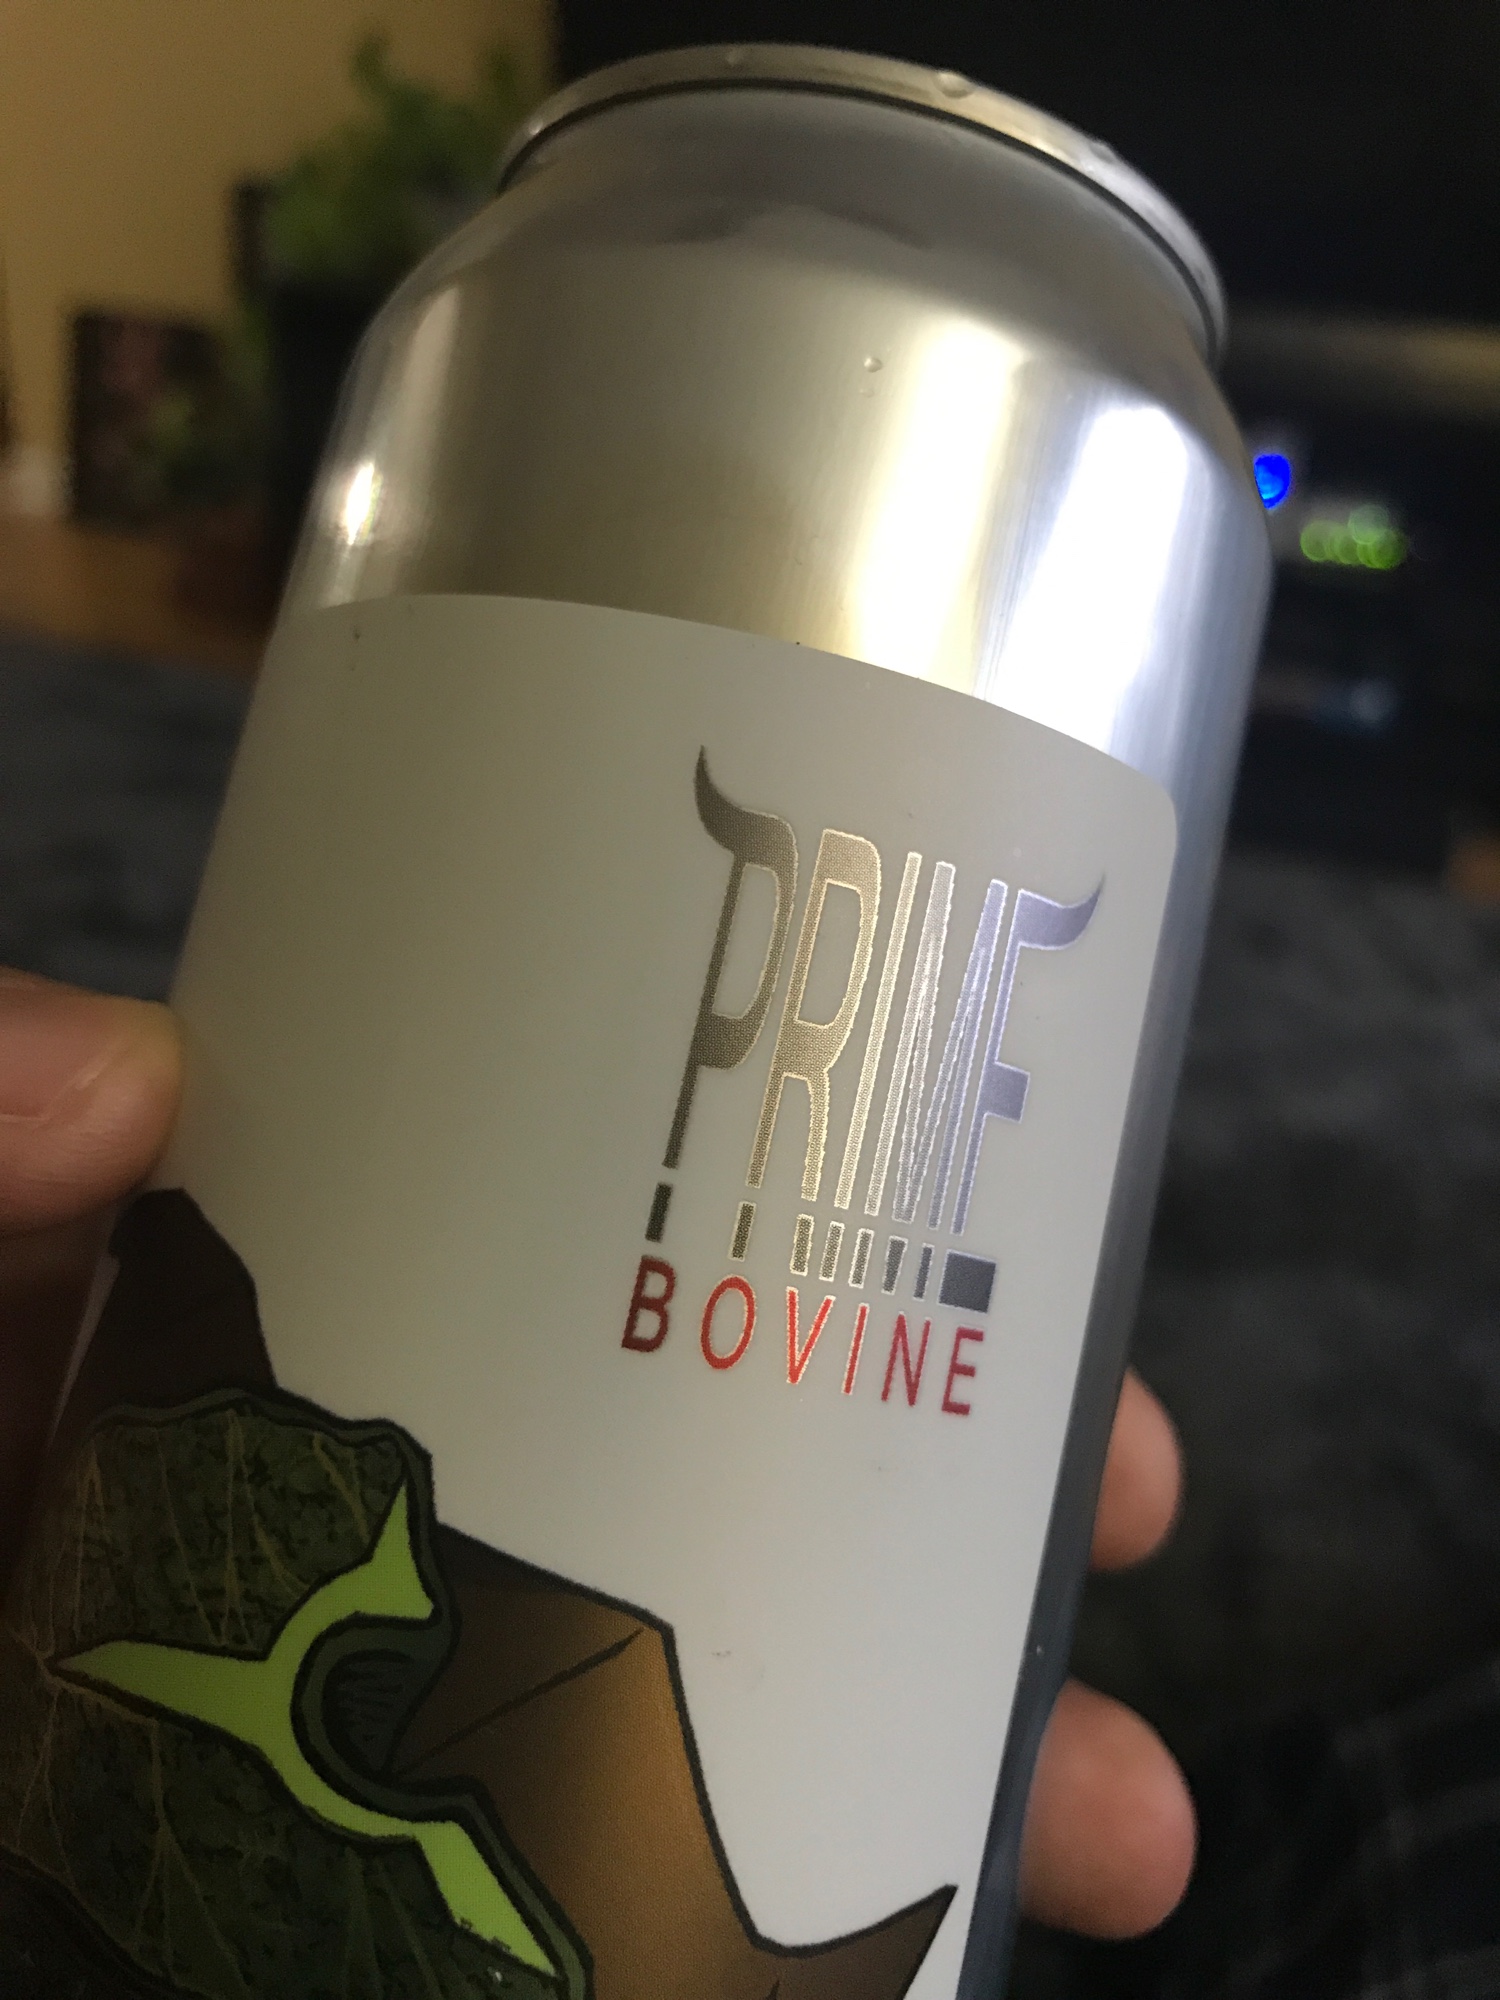 Bolero Snort Brewery's Prime Bovine